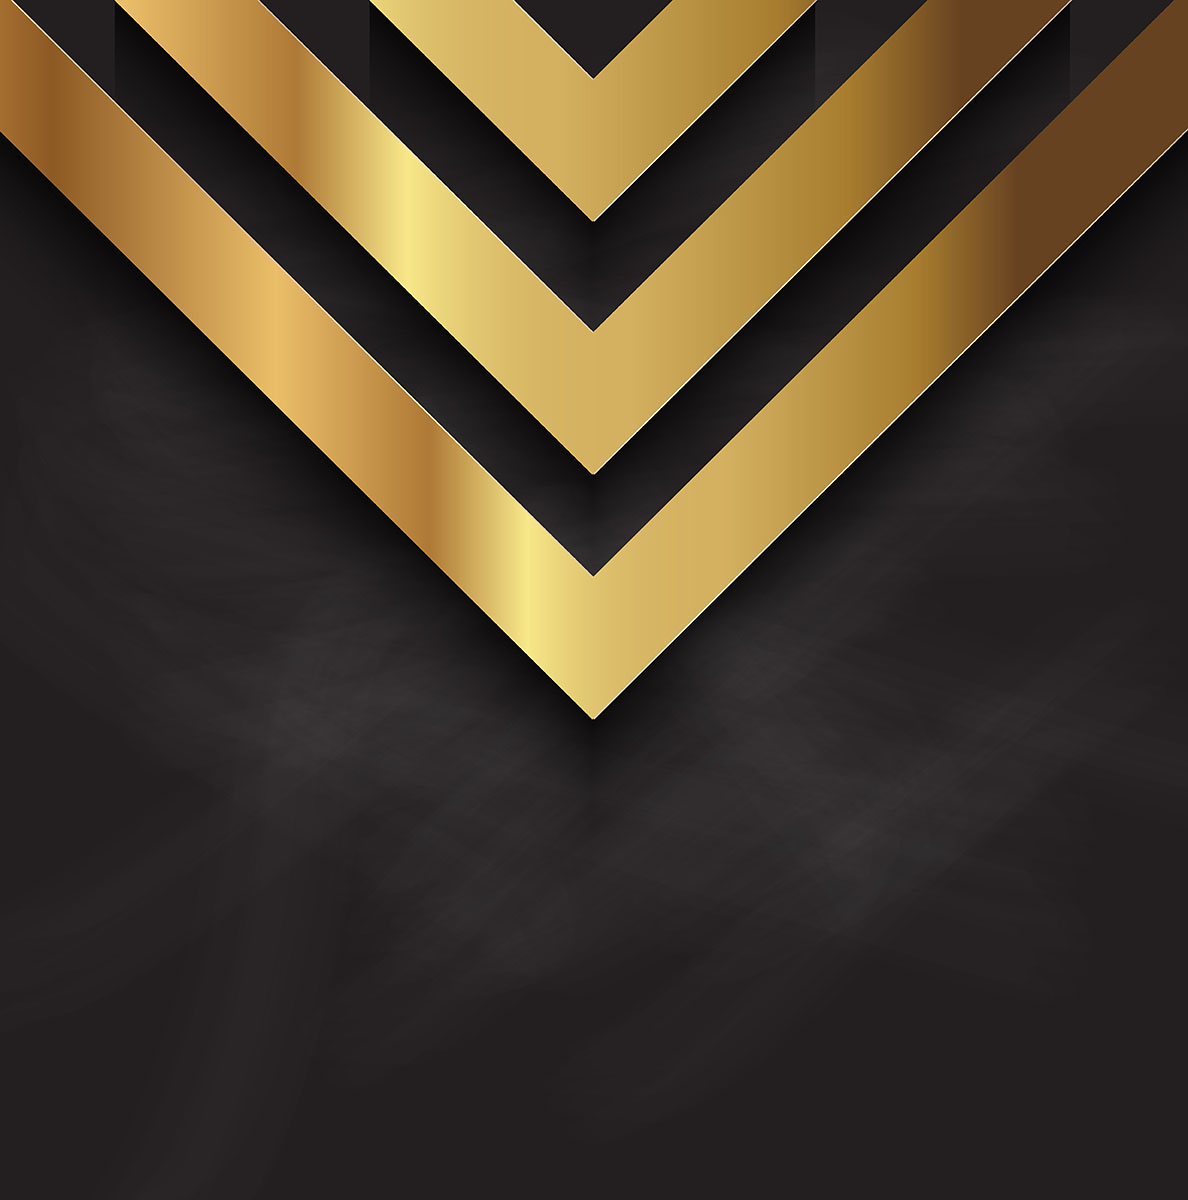  Abstract  gold  design on blackboard texture  204029 